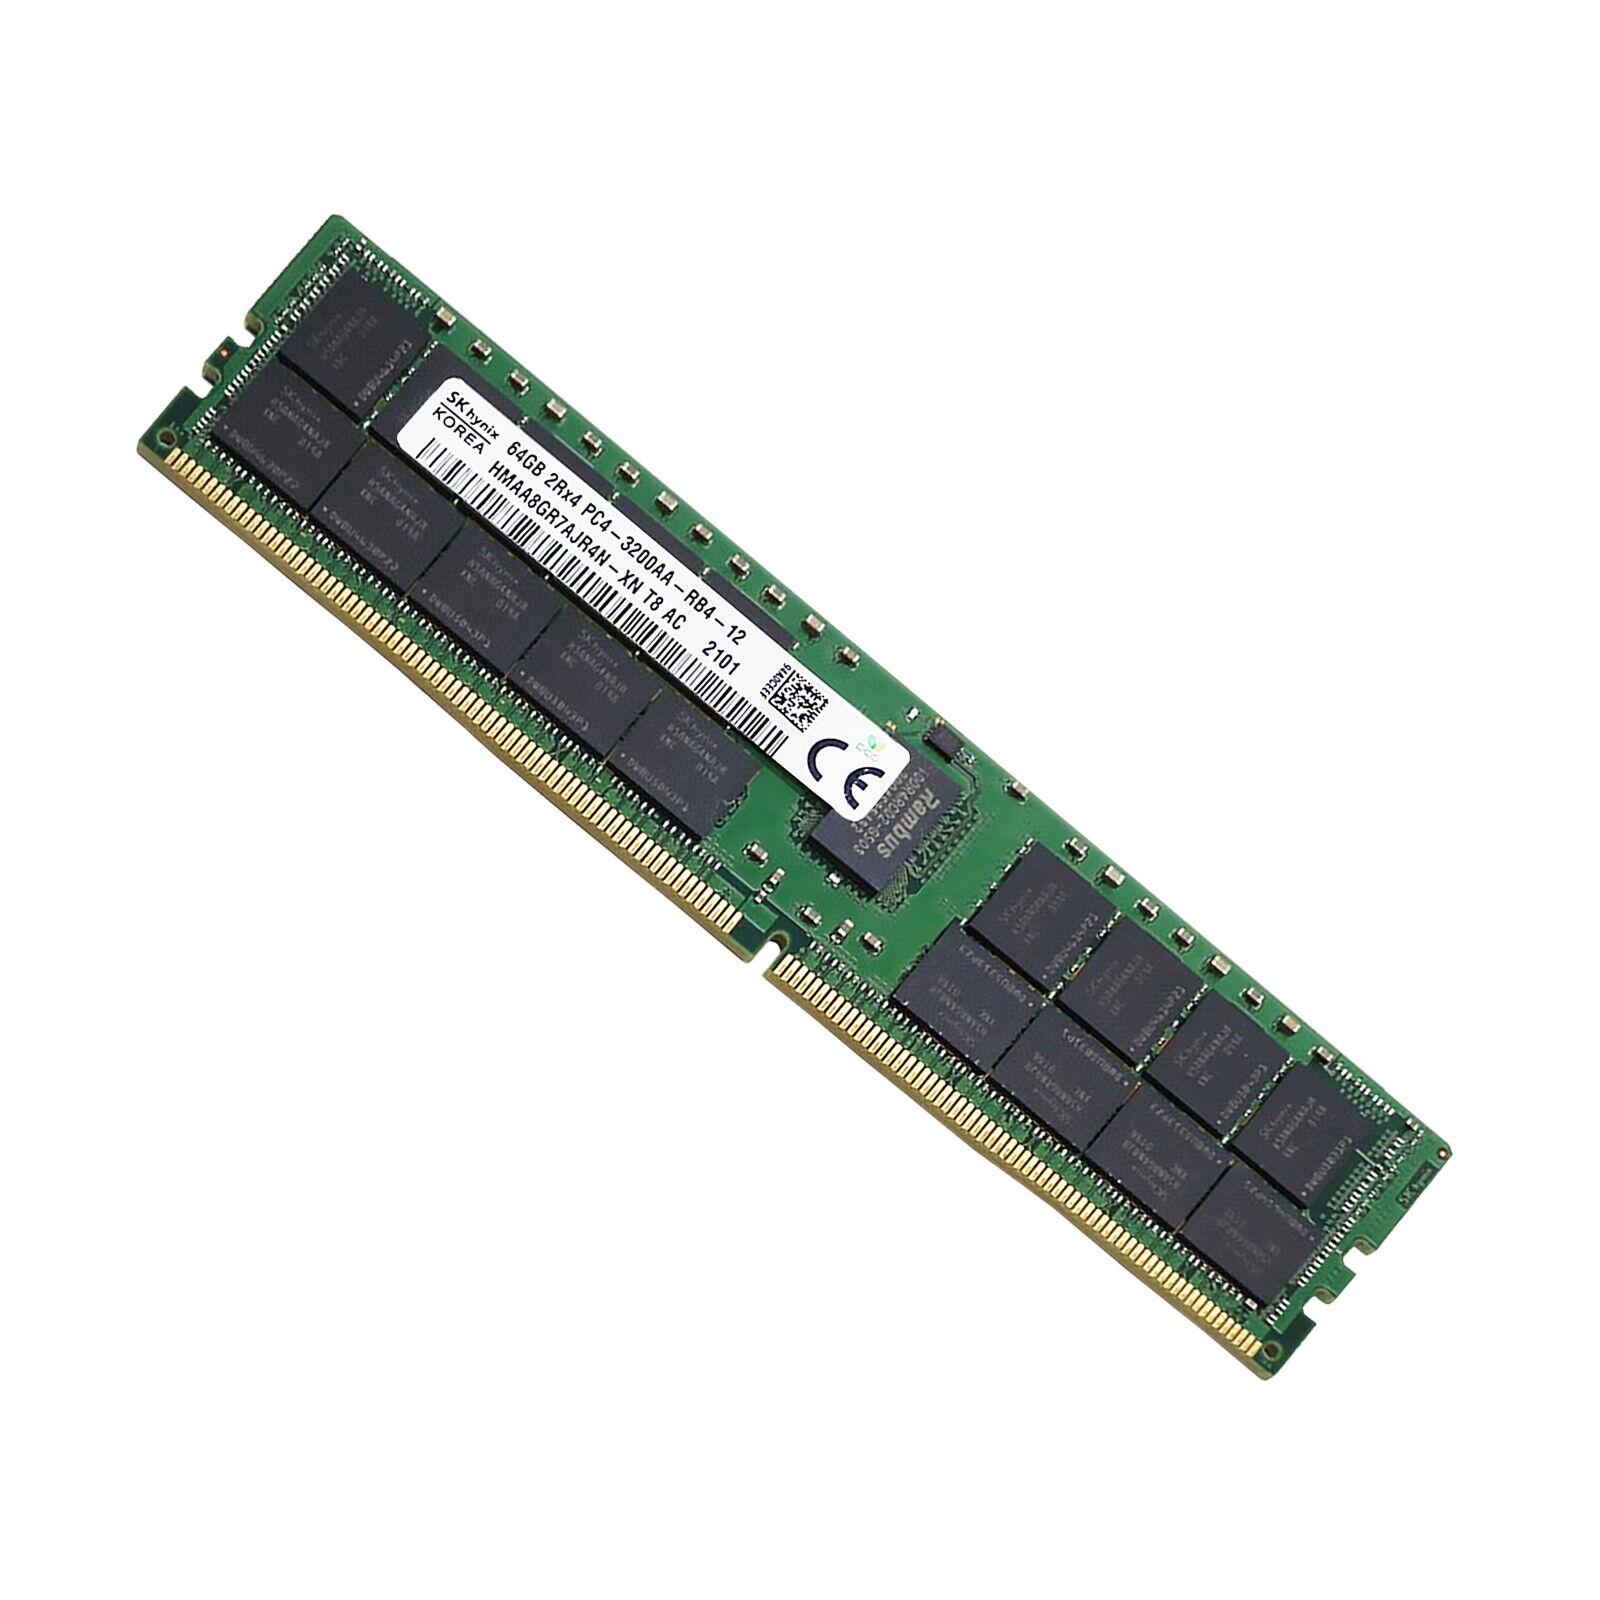 NEW 64GB Hynix PC4 3200AA DDR4 25600 2RX4 Server Memory CL22 HMAA8GR7AJR4N-XN